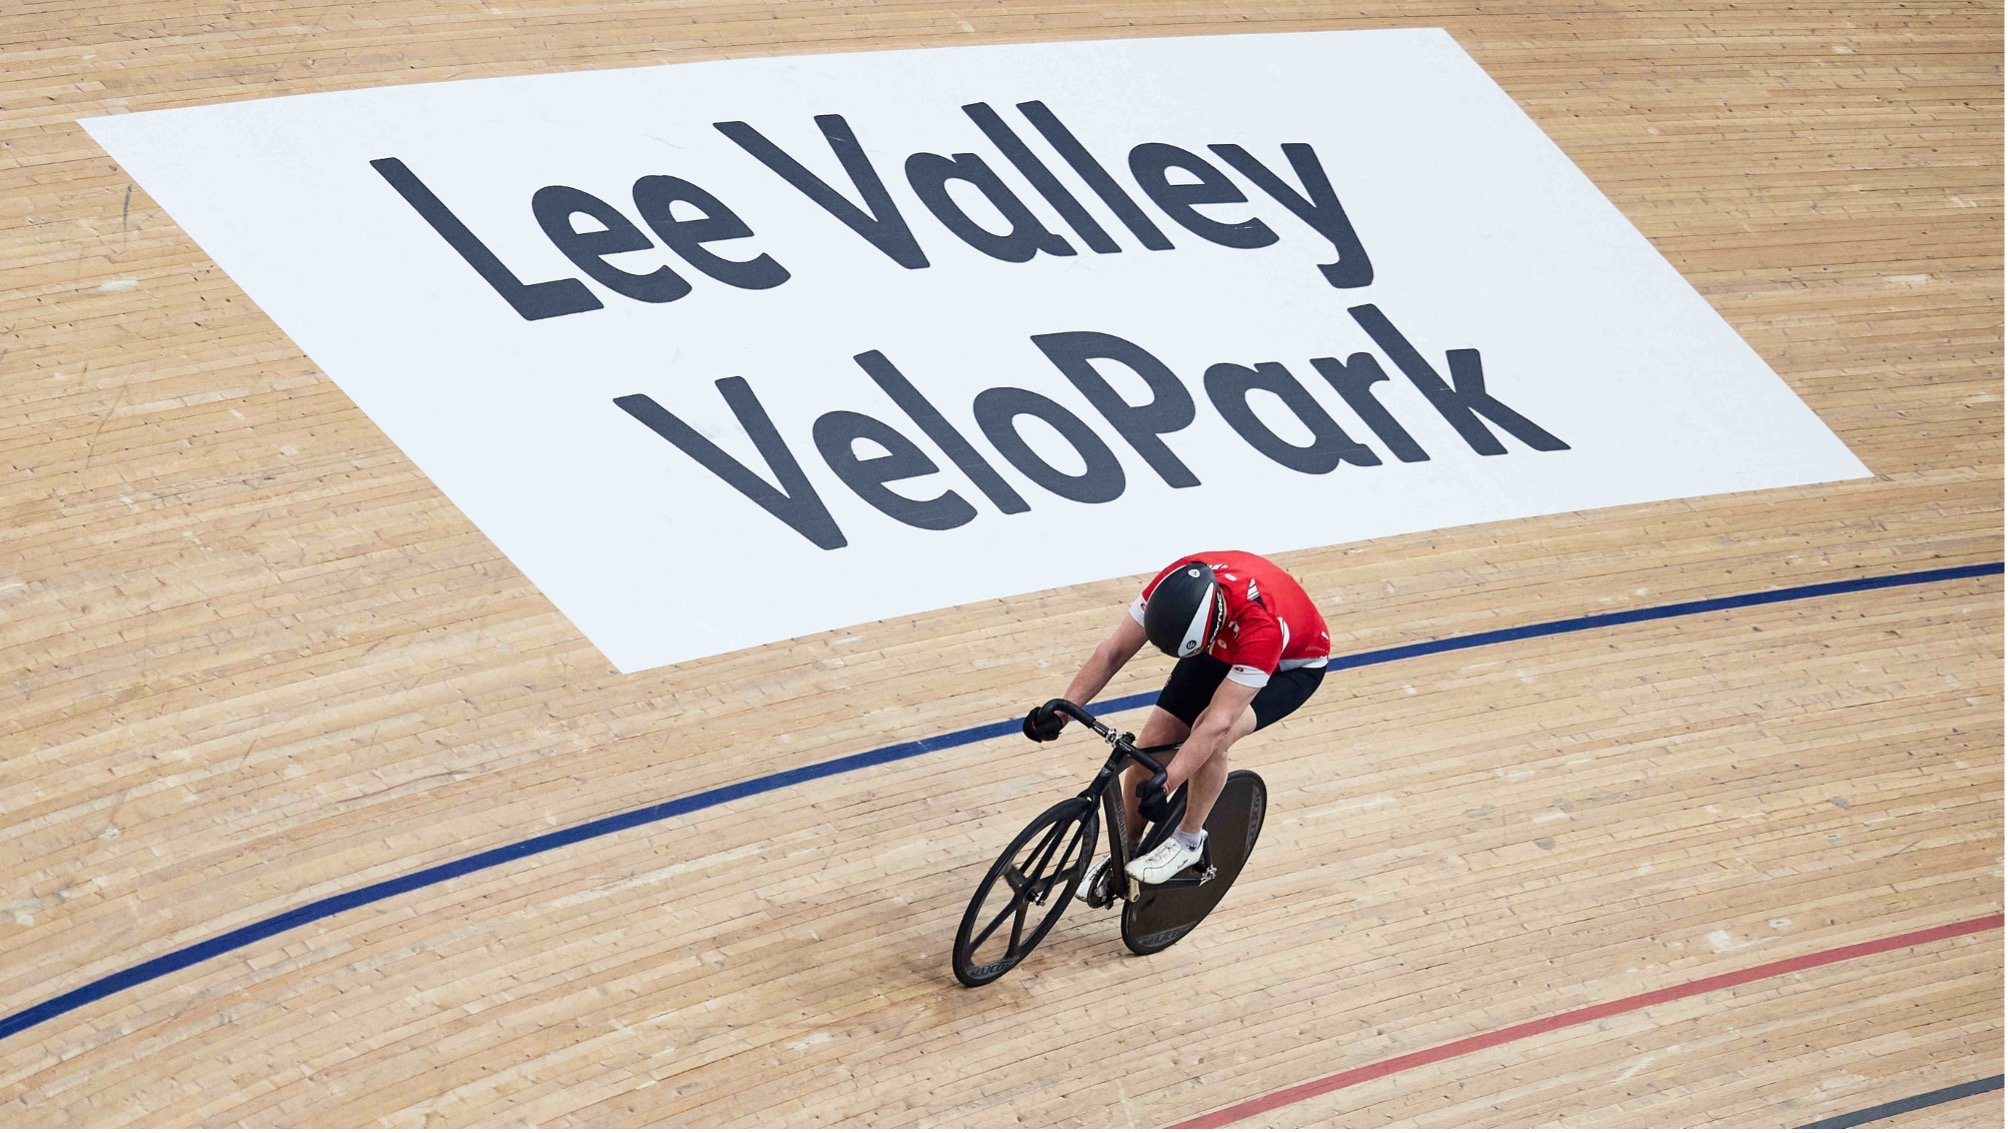 Lee Valley VeloPark